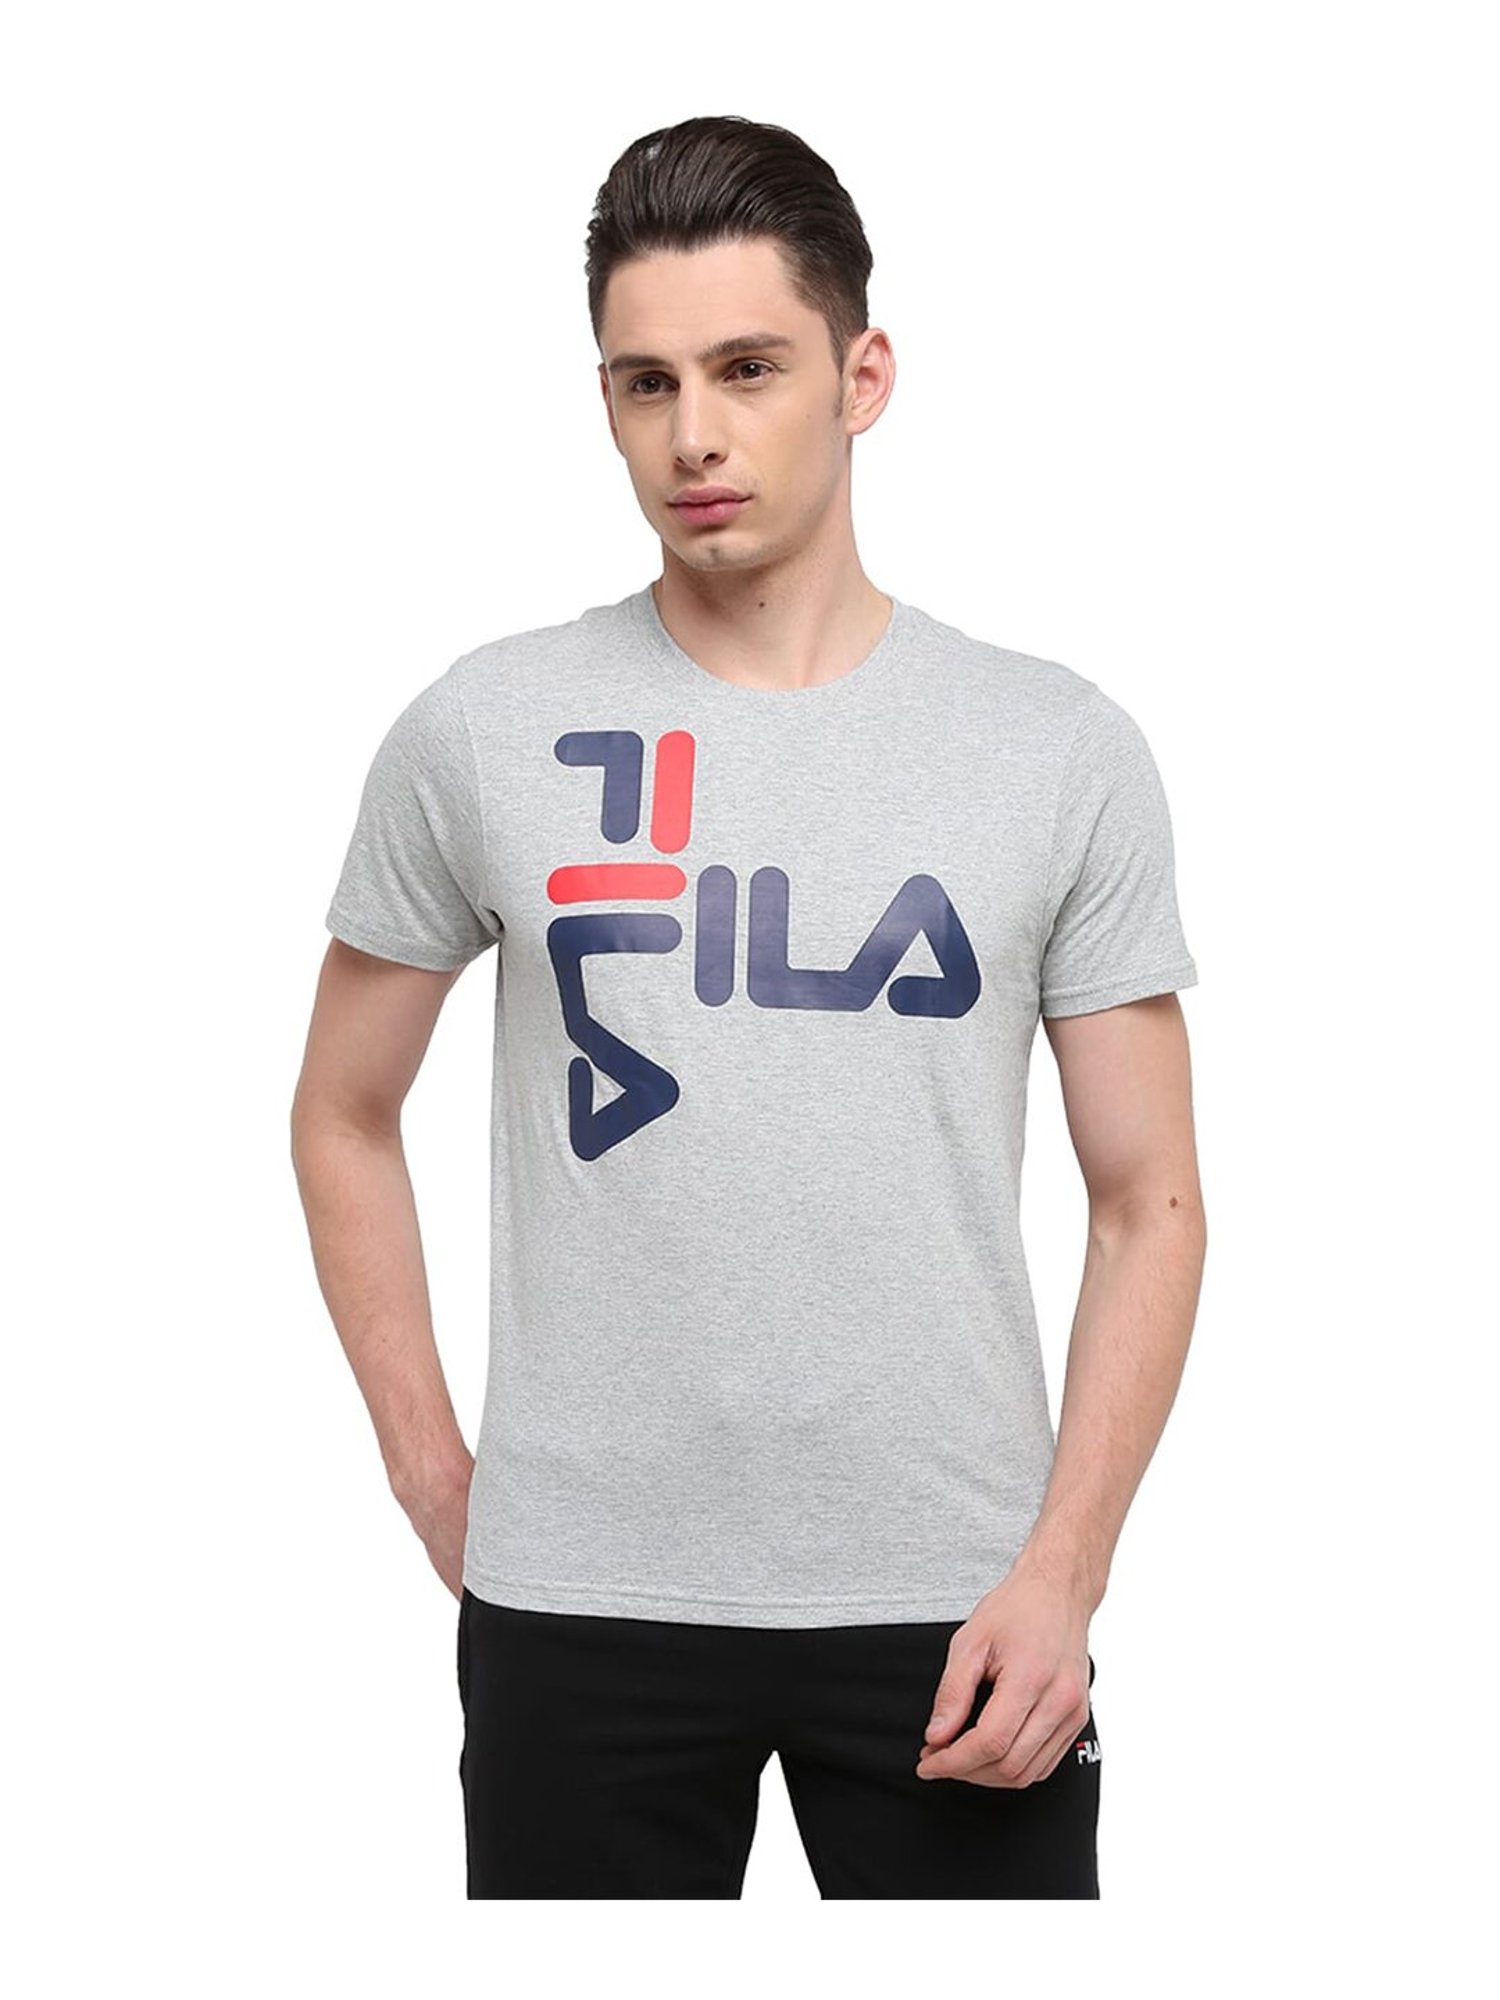 Buy Fila Grey Crew Cotton T Shirt For Men S Online Tata Cliq